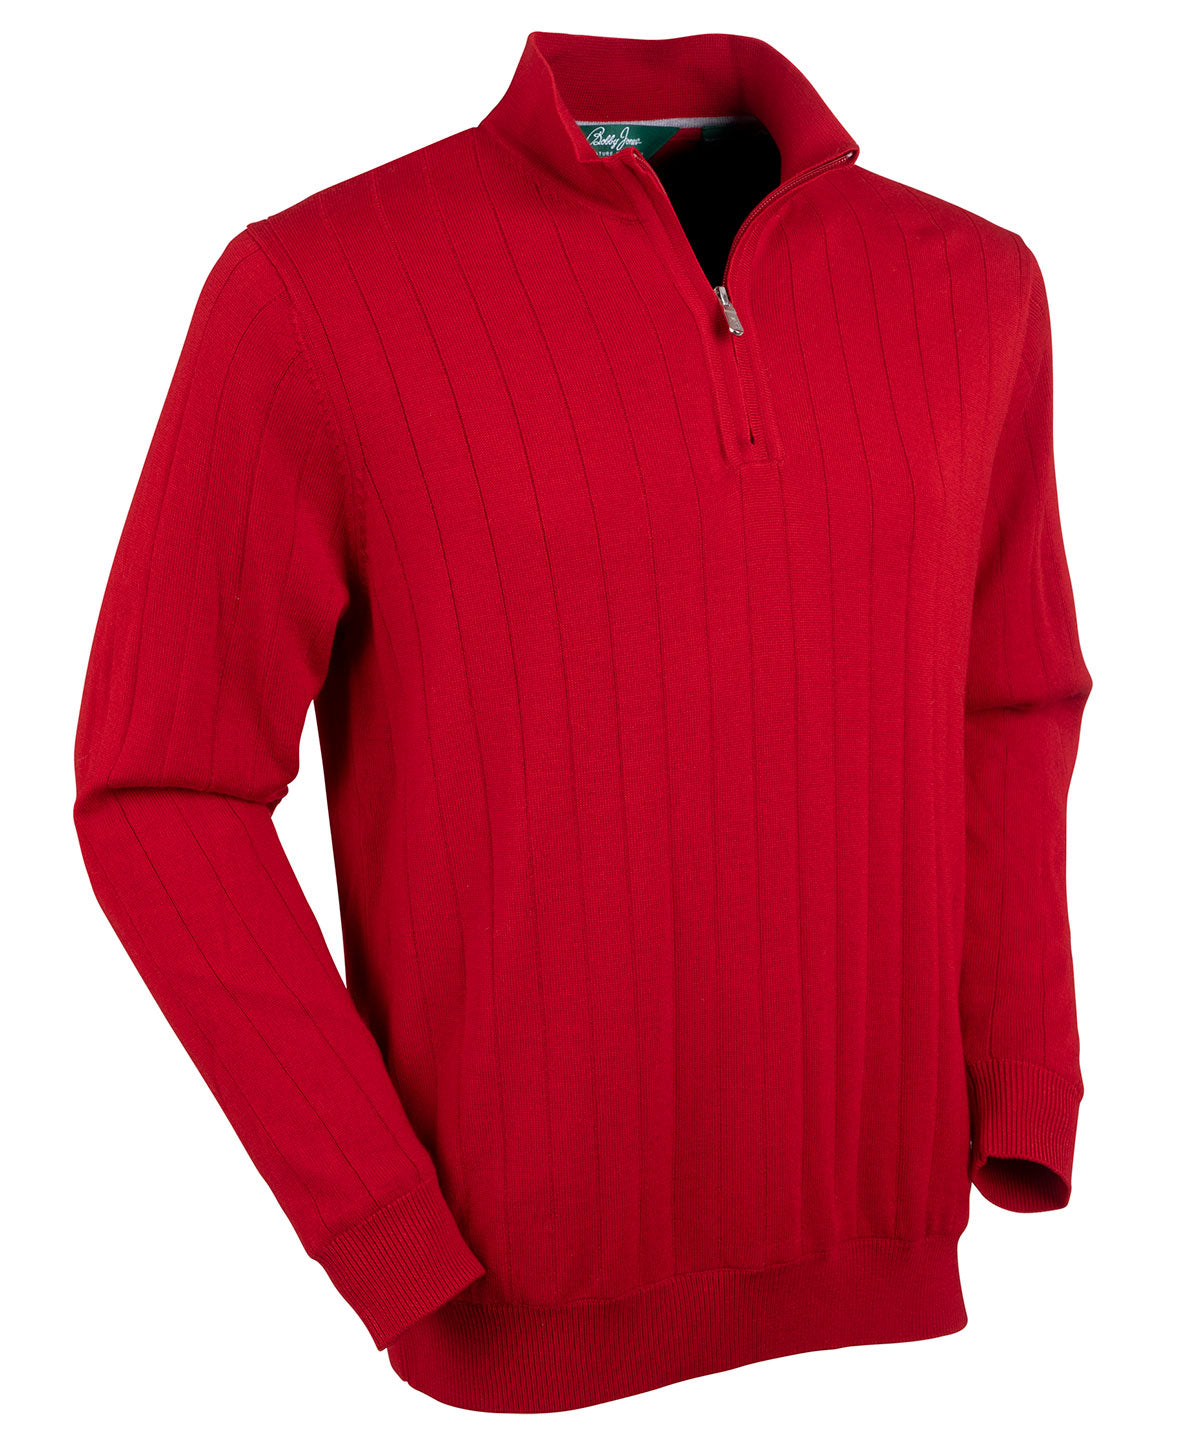 Signature Merino Lined Quarter-Zip Mock Neck Sweater